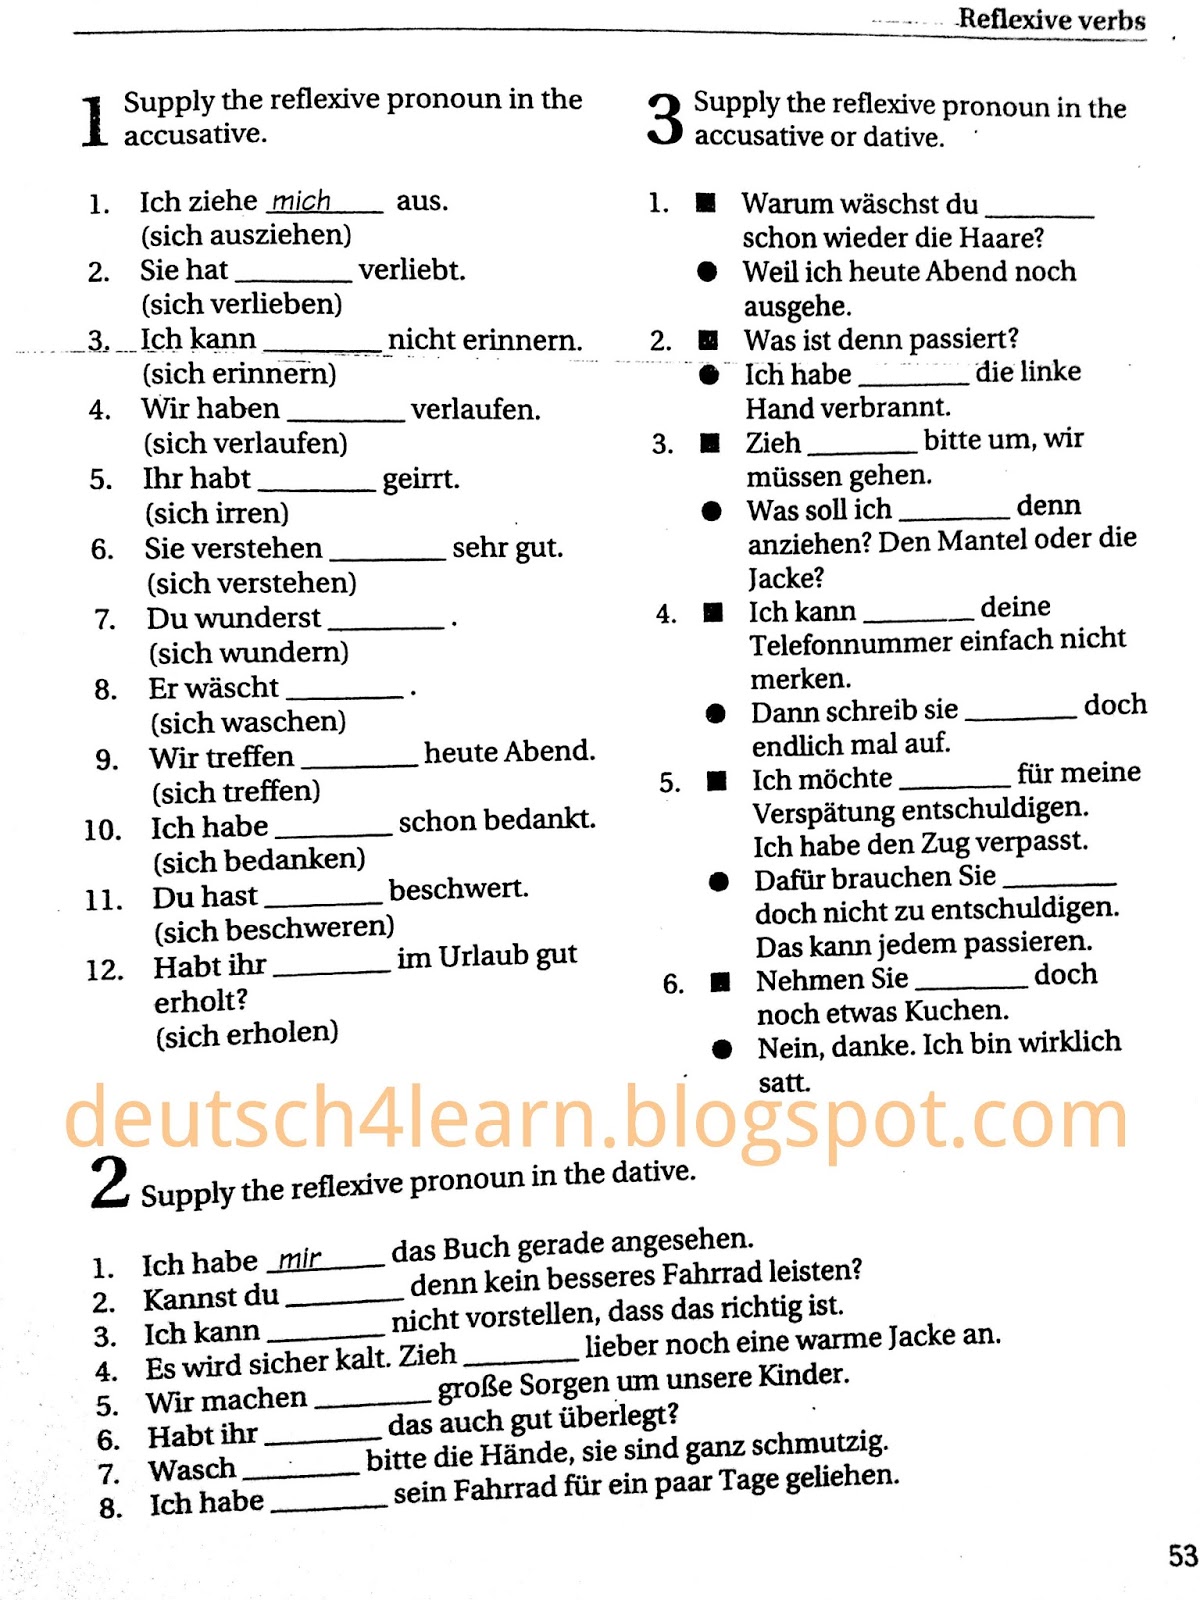 reflexive-verbs-in-german-language-learn-deutsch-german-and-study